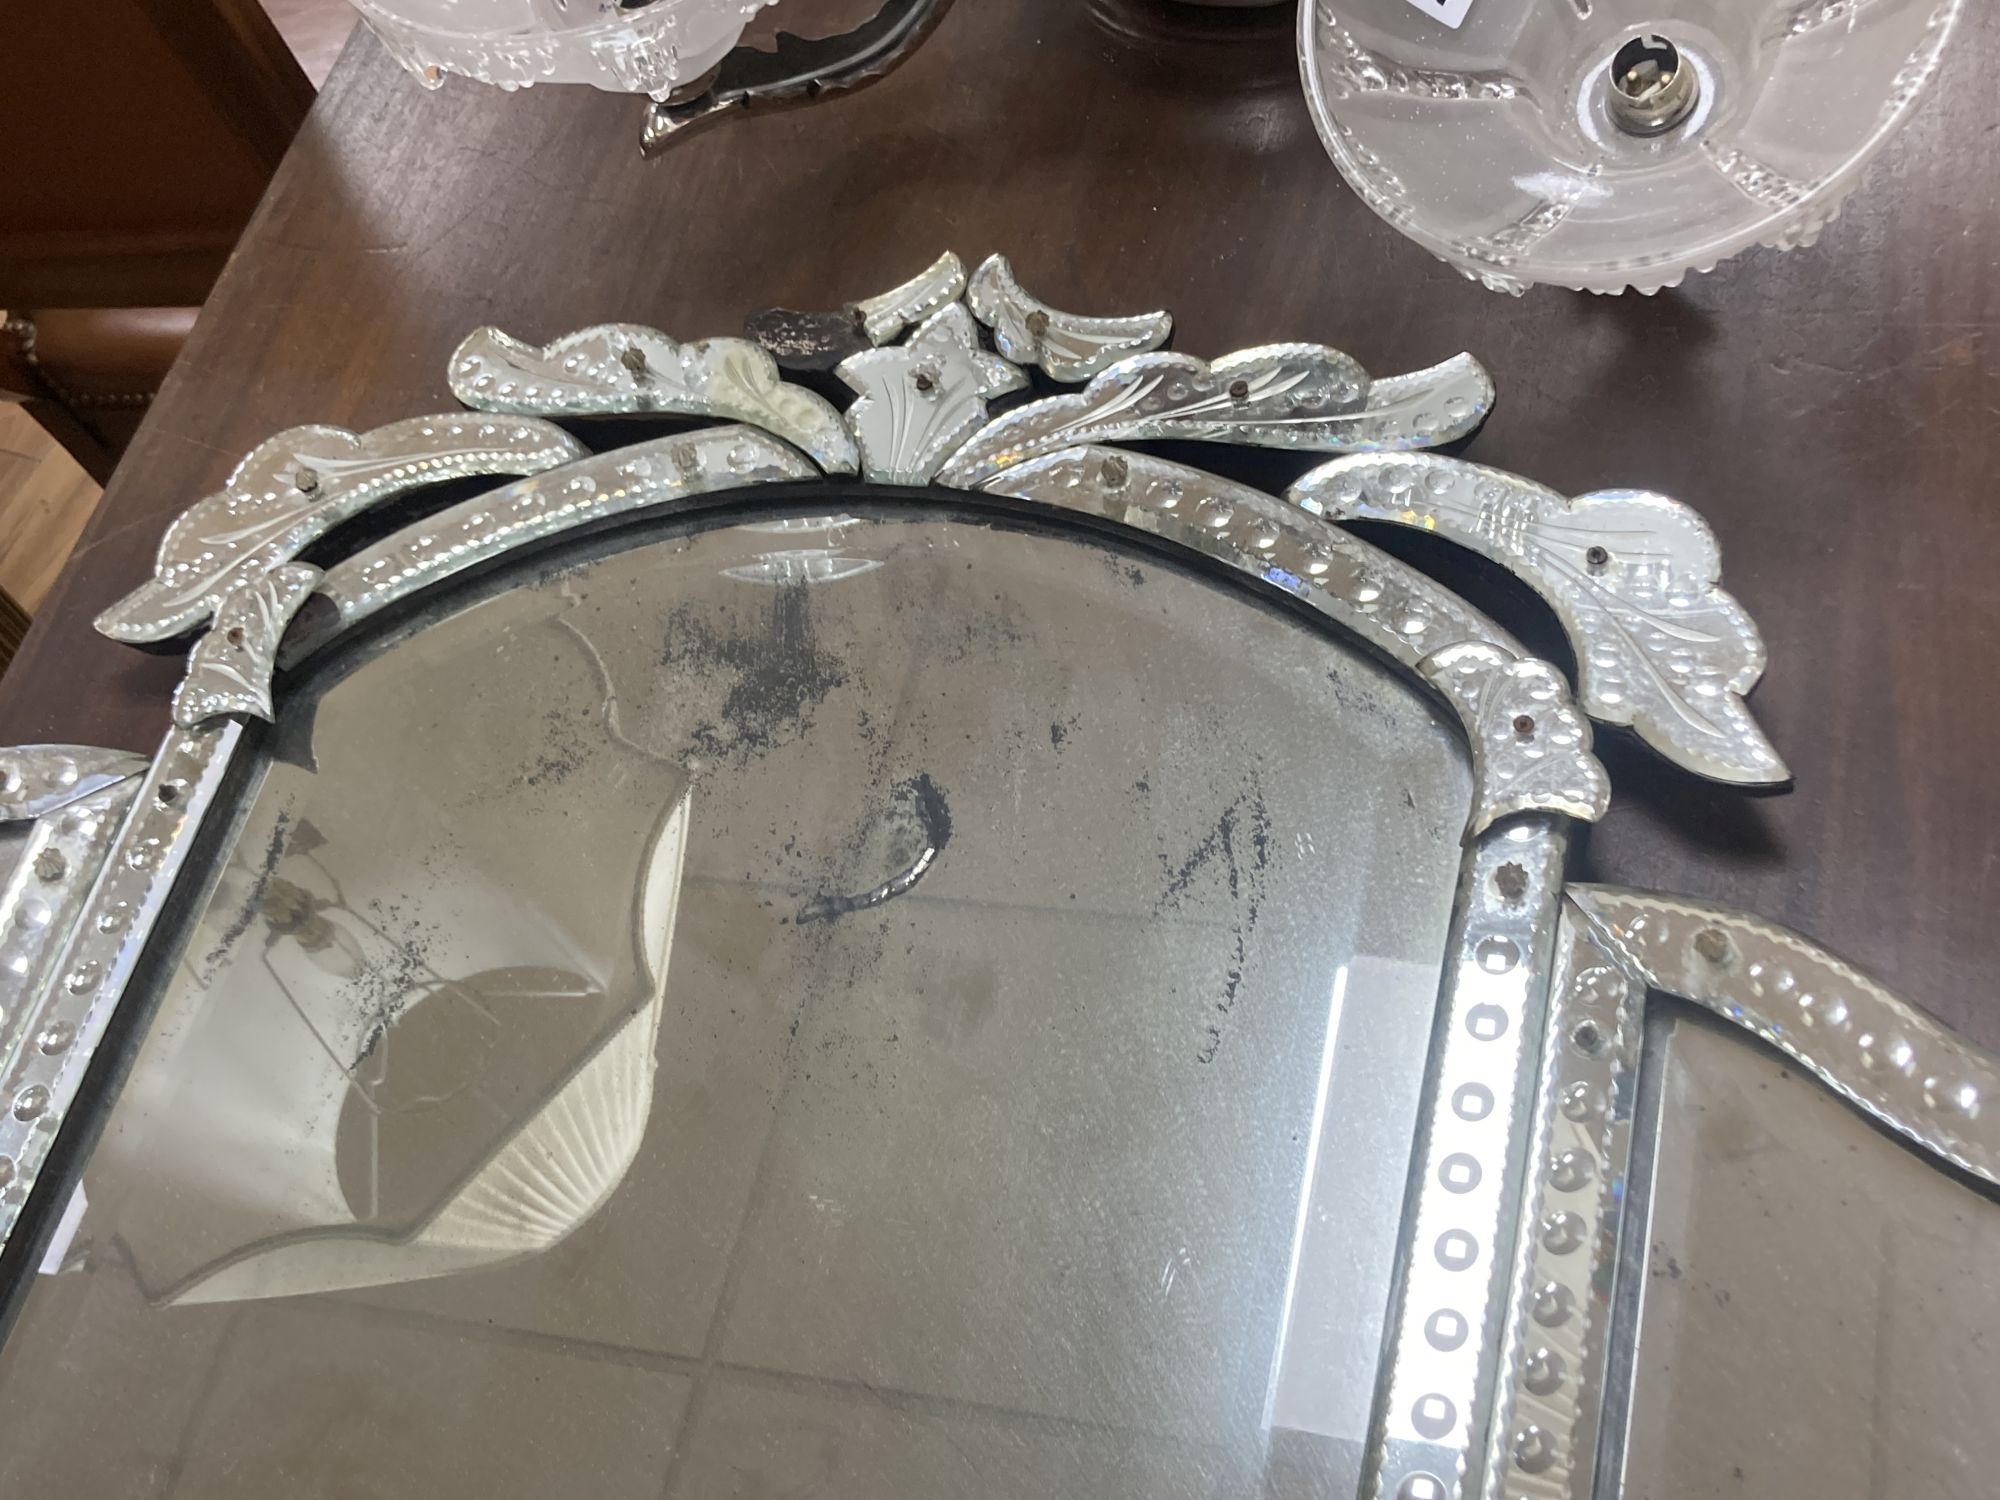 A Venetian glass triple dressing table mirror, width 88cm, height 63cm